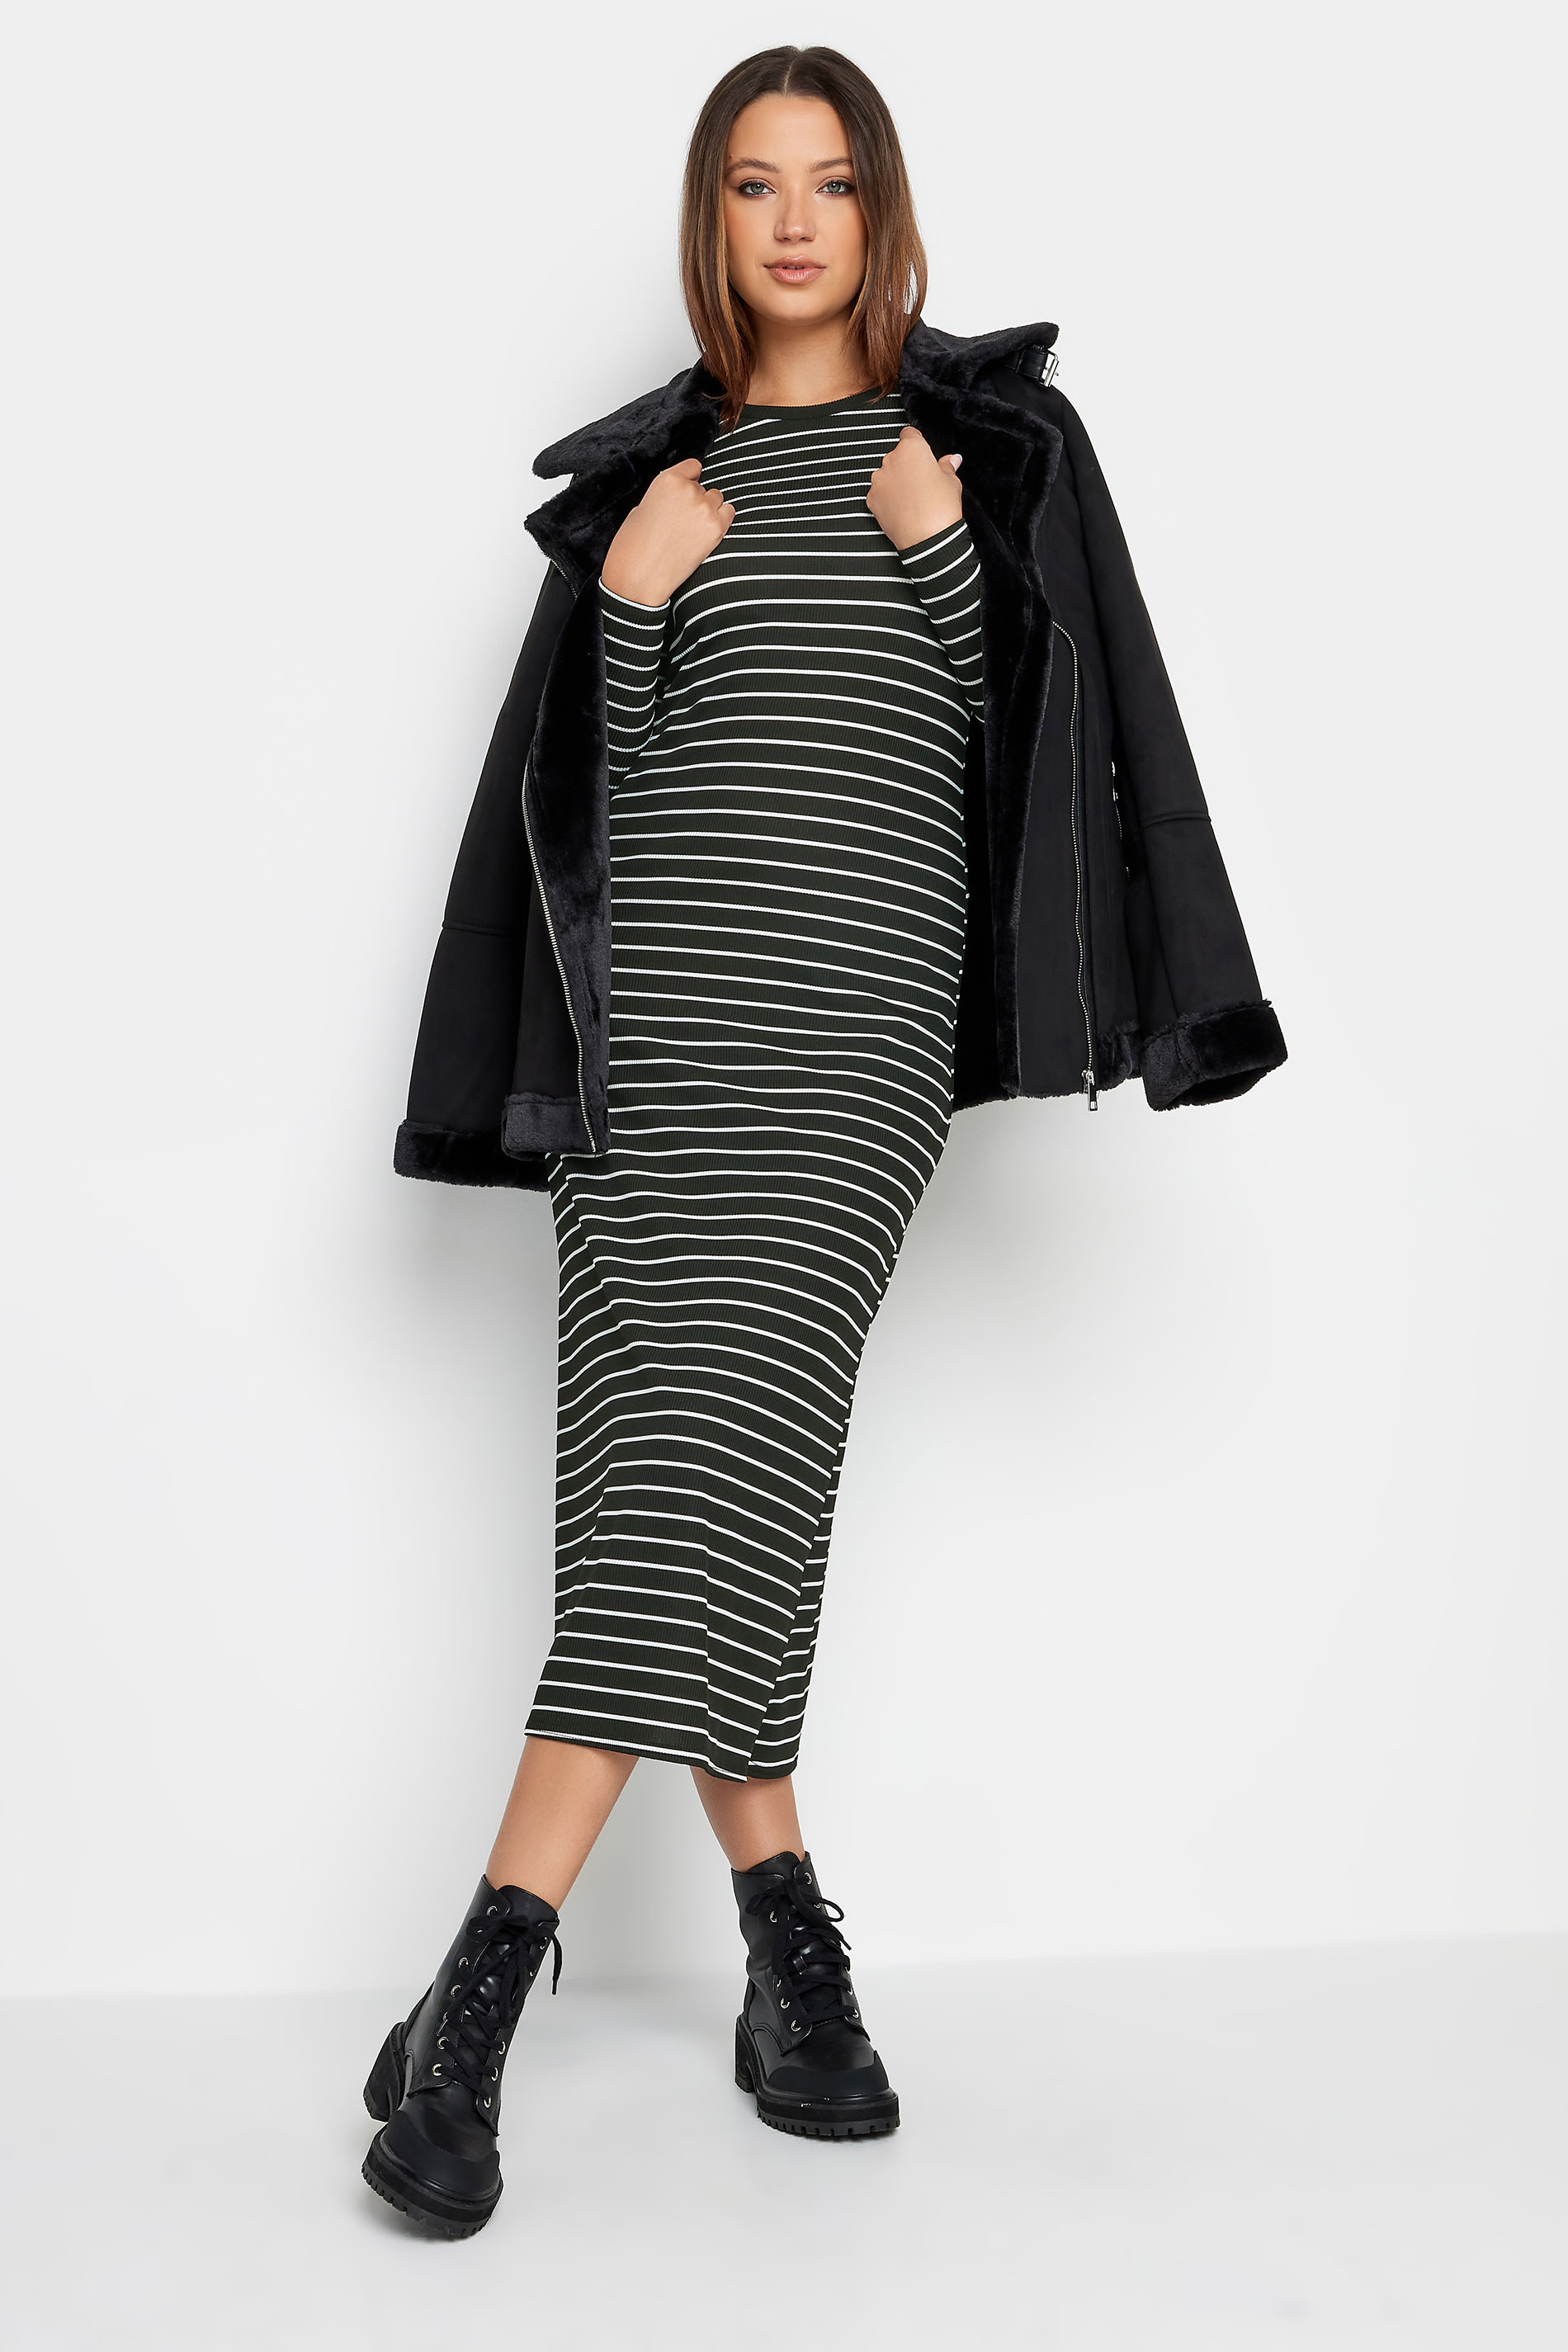 LTS Tall Black & White Stripe Ribbed Midi Dress | Long Tall Sally  2